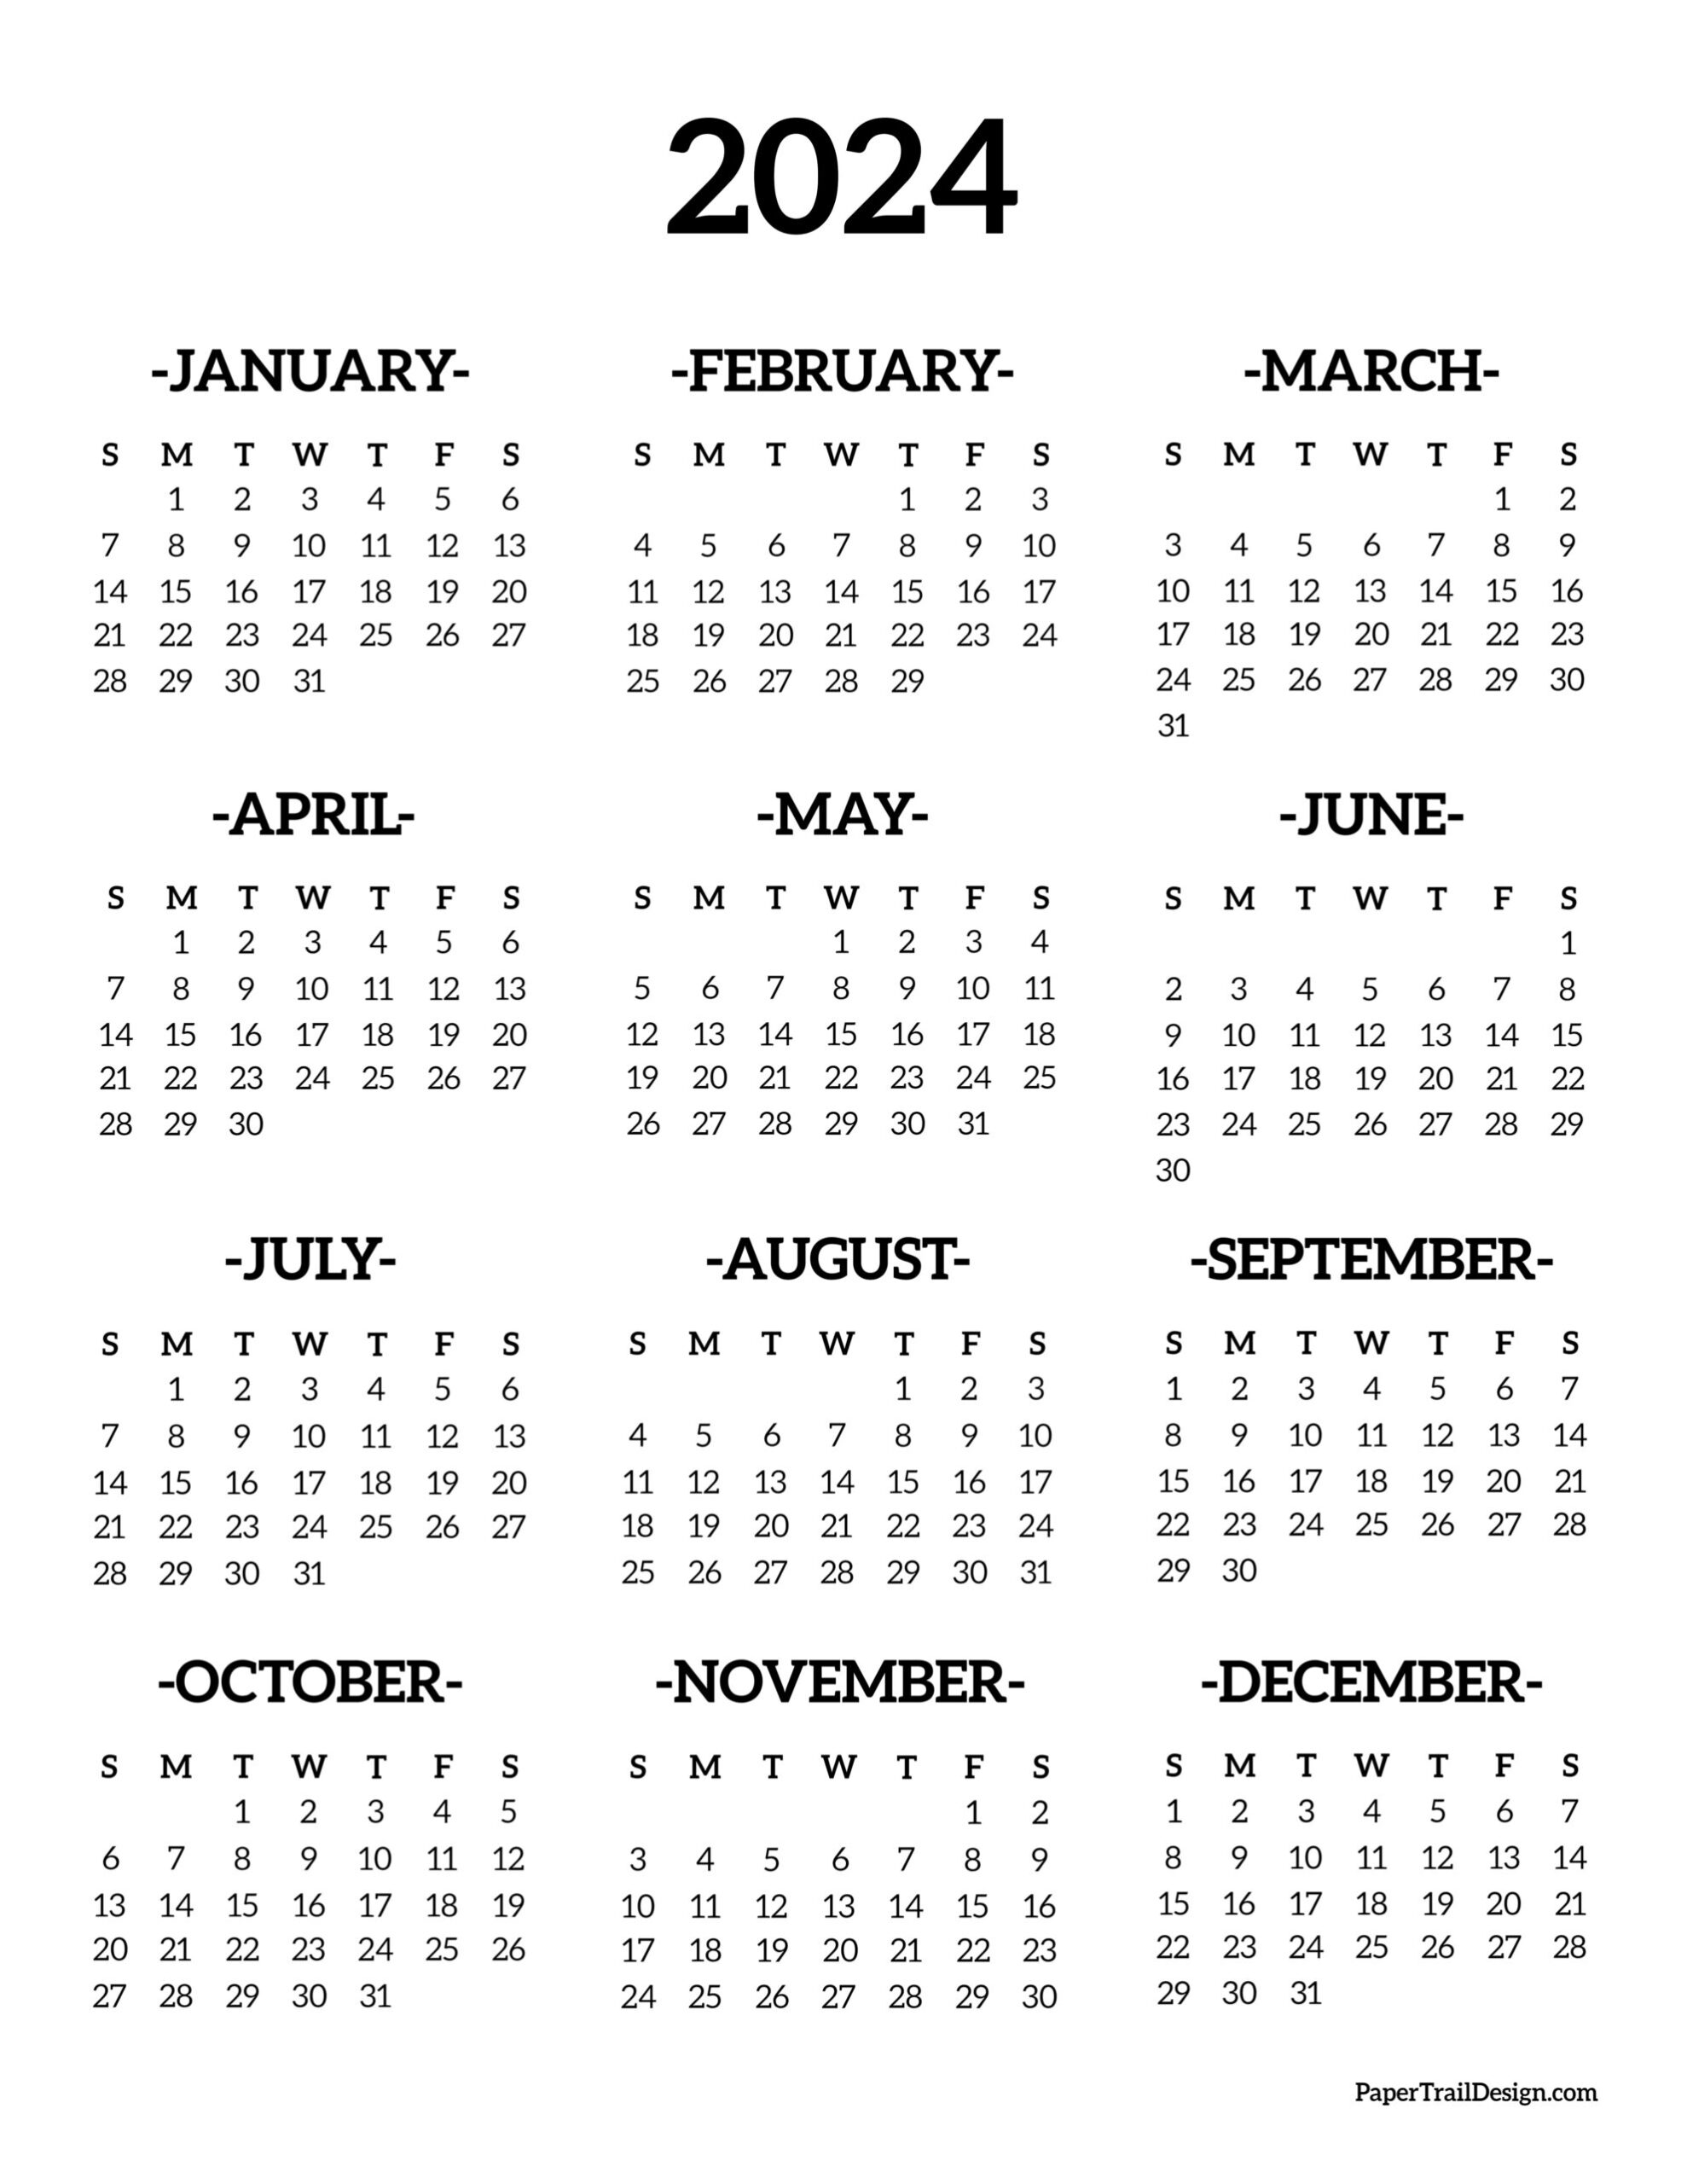 Calendar 2024 Printable One Page - Paper Trail Design for Free 2024 Calendar Printable